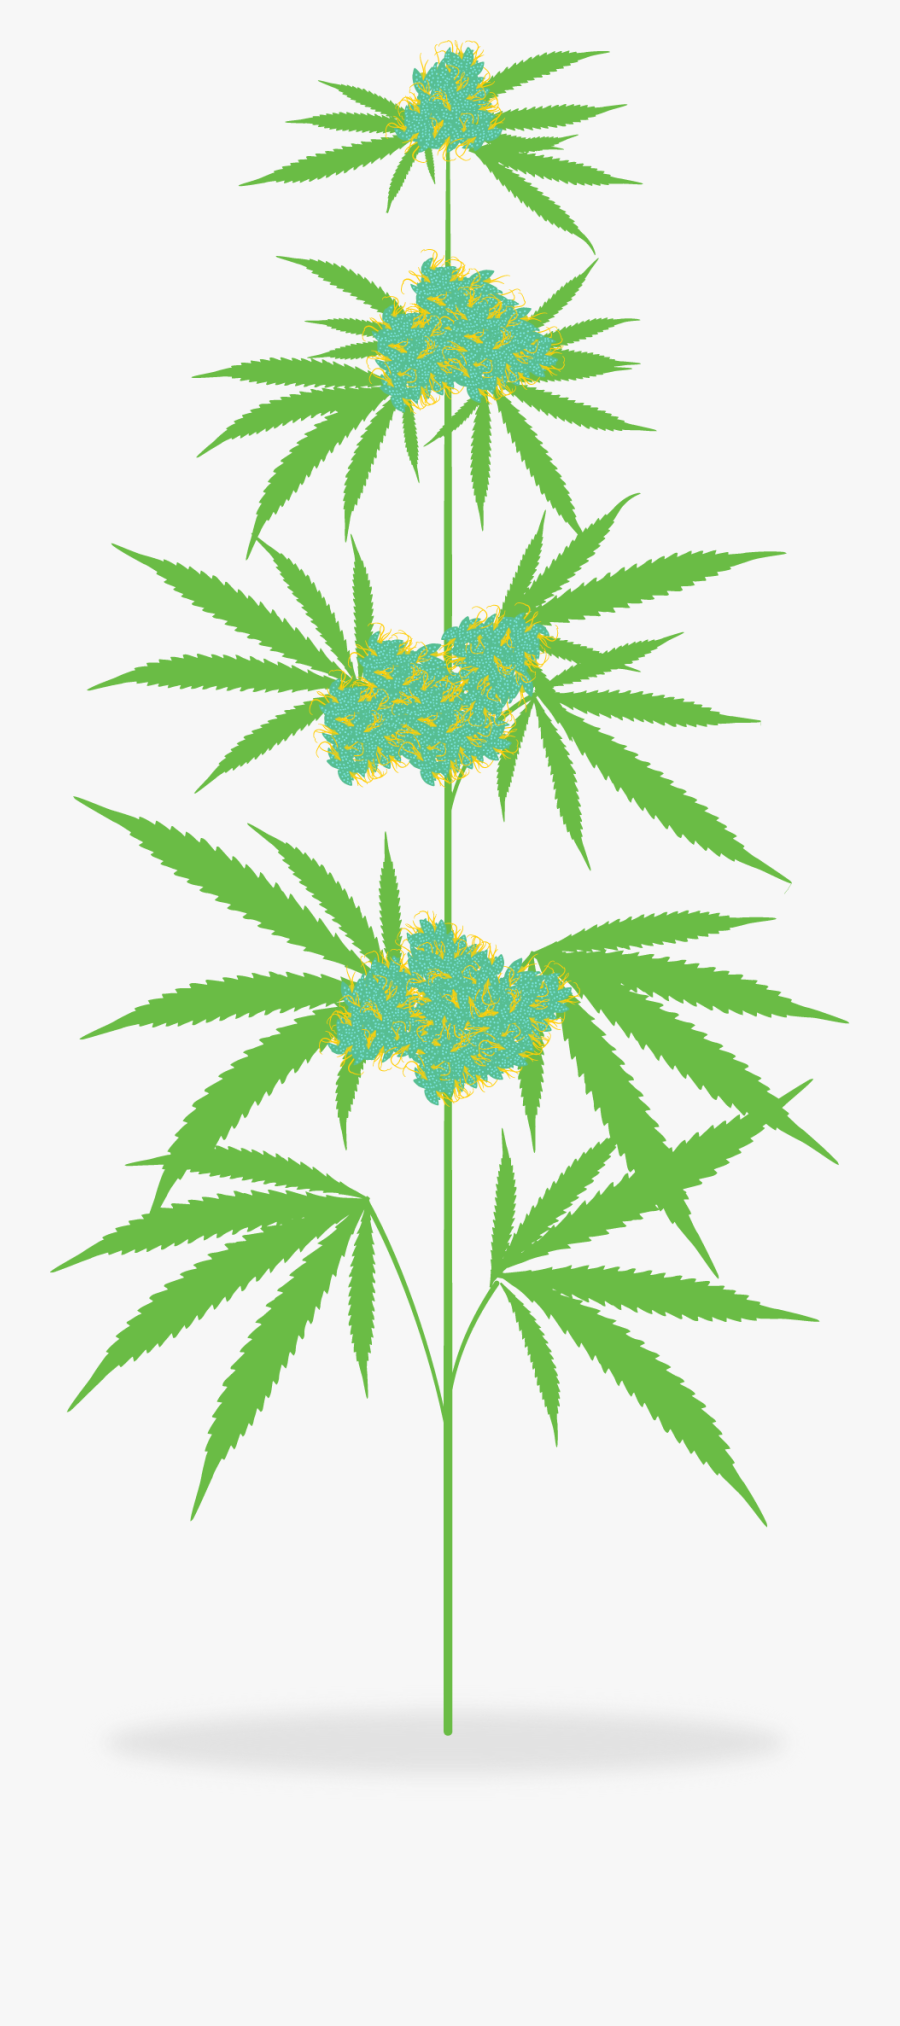 How Is Marijuana Medicine - Cannabis Tree Clipart Png, Transparent Clipart